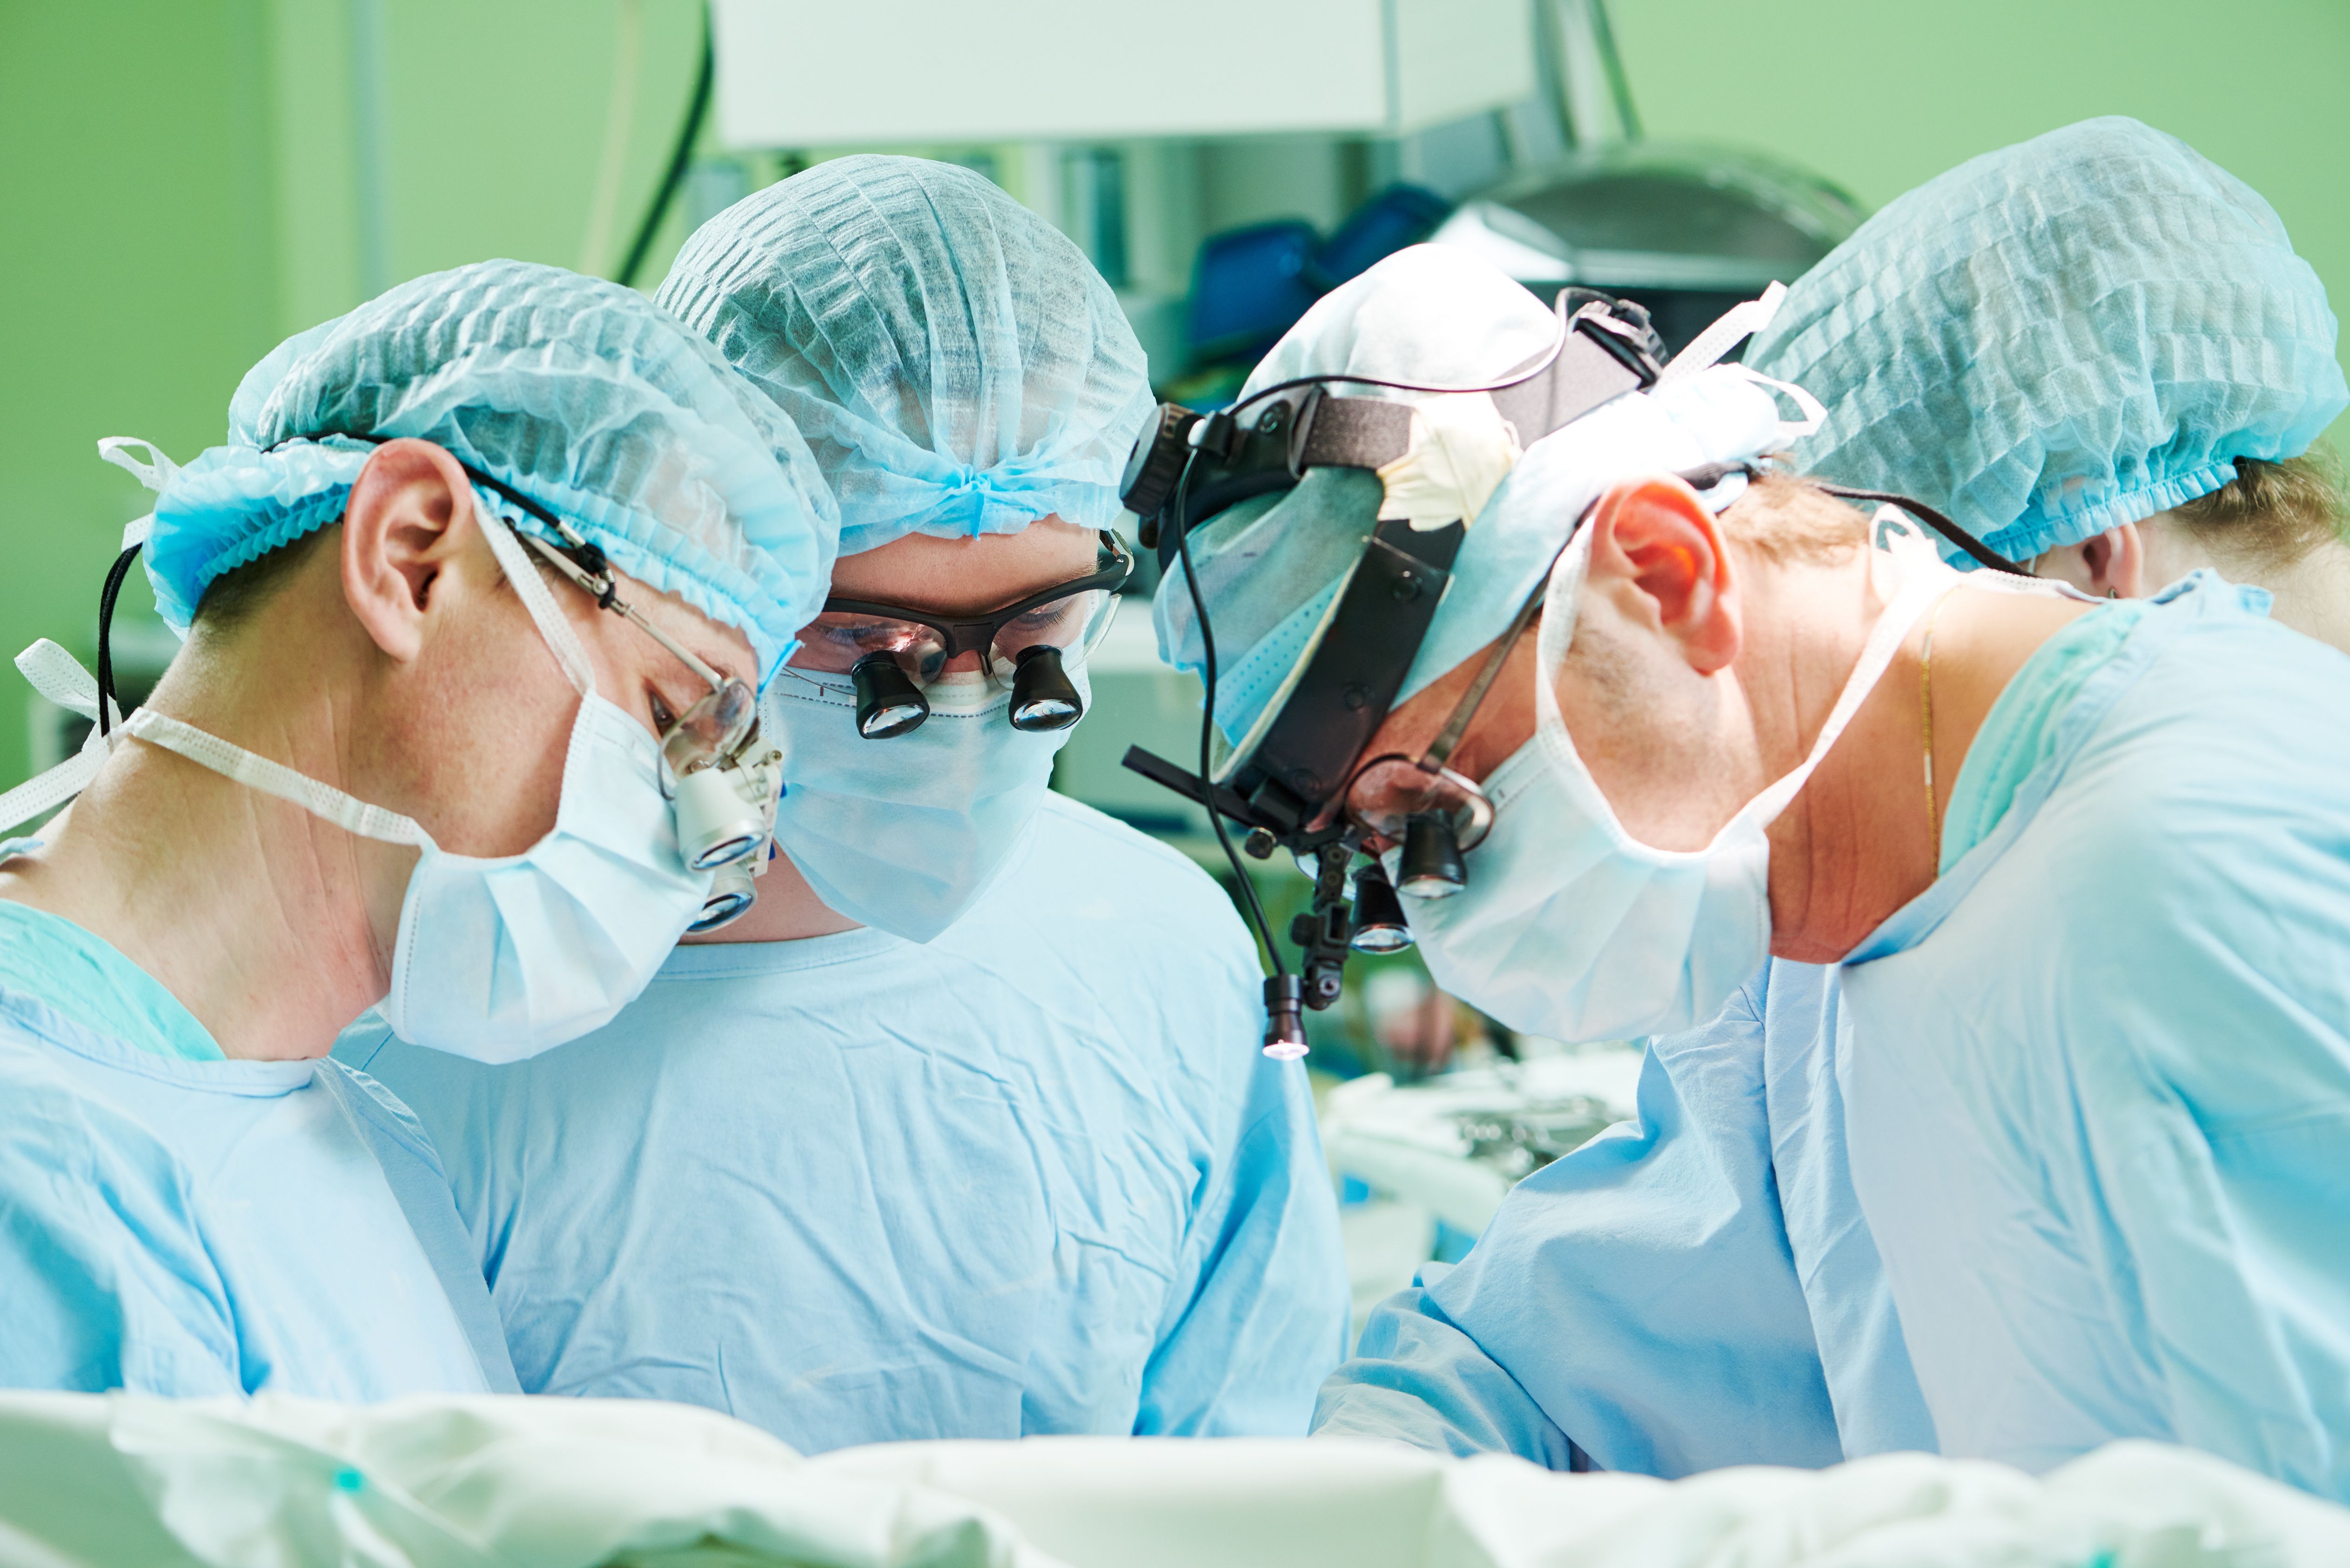 Операция в 90 лет. Кардиохирургические операции. Хирургические операции на сердце. Кардиохирург в операционной.